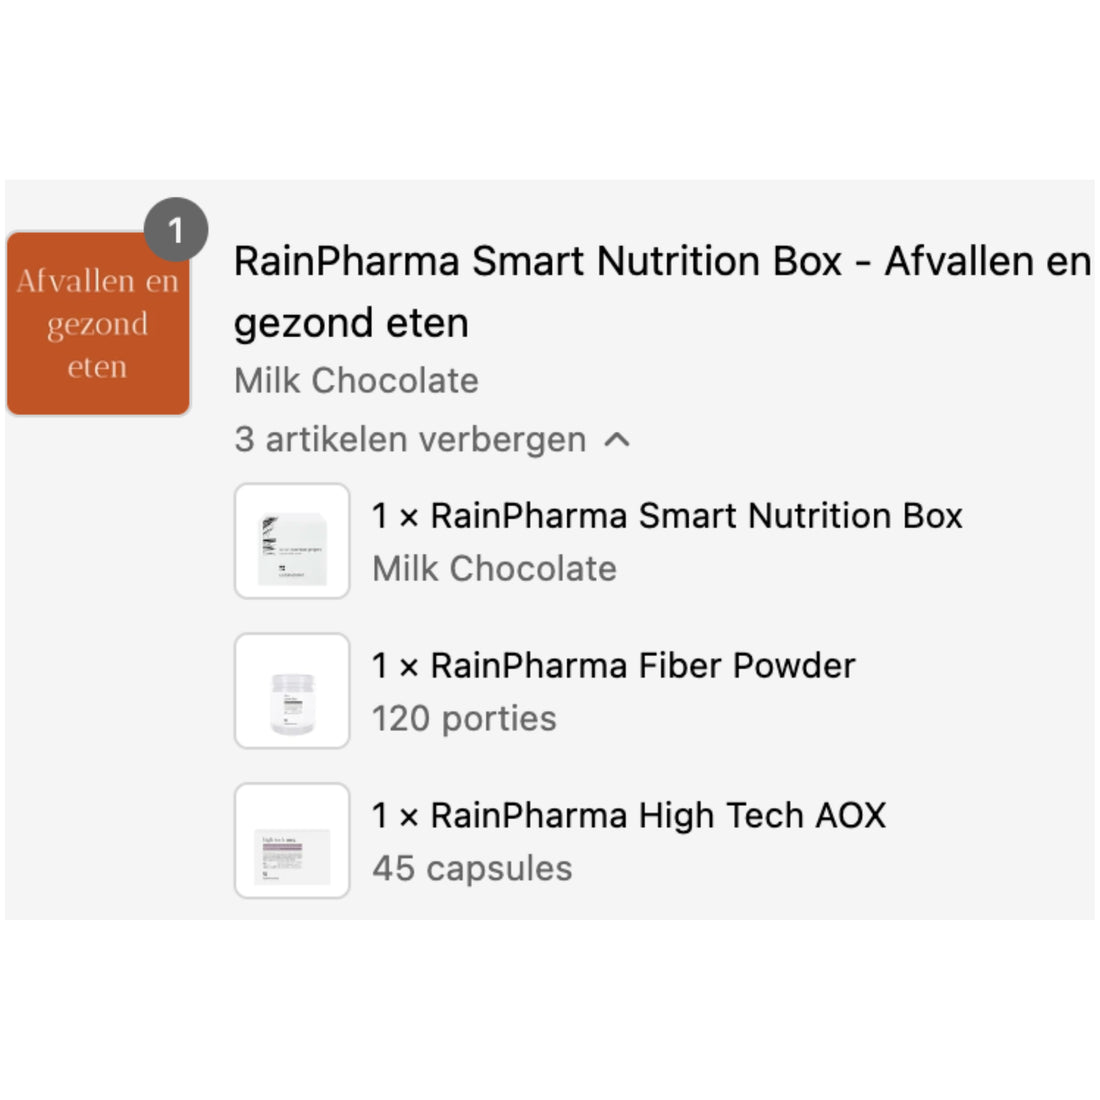 RainPharma Smart Nutrition Box - Afvallen en gezond eten